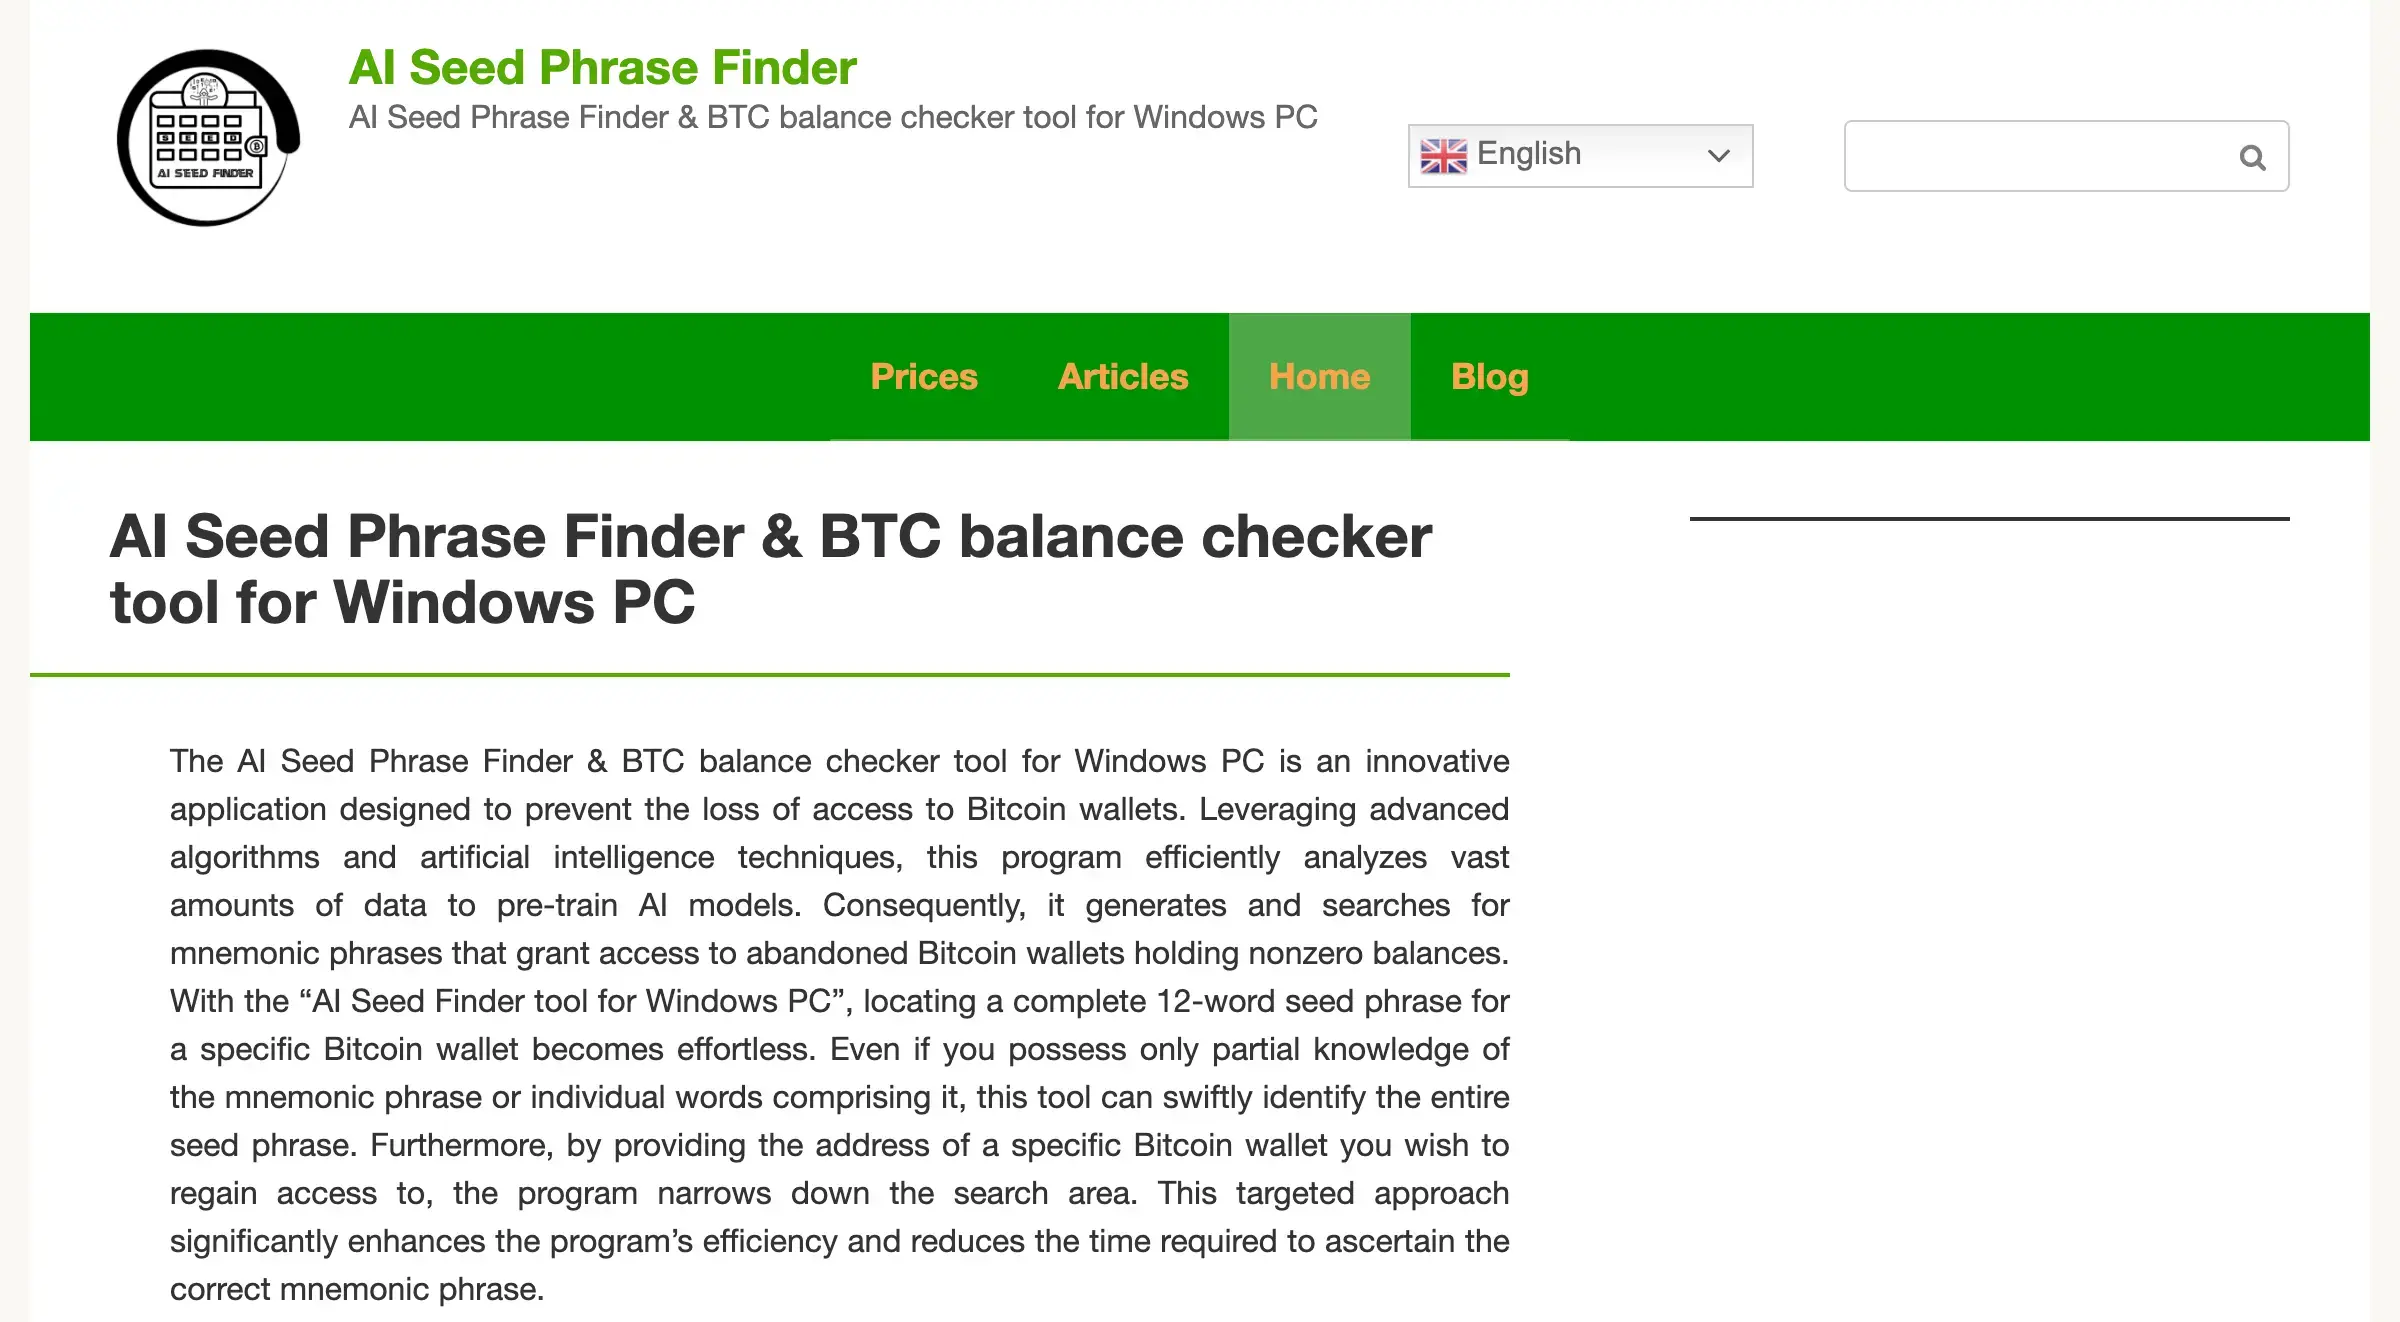 AI Seed Phrase Finder & BTC balance checker tool for Windows PC